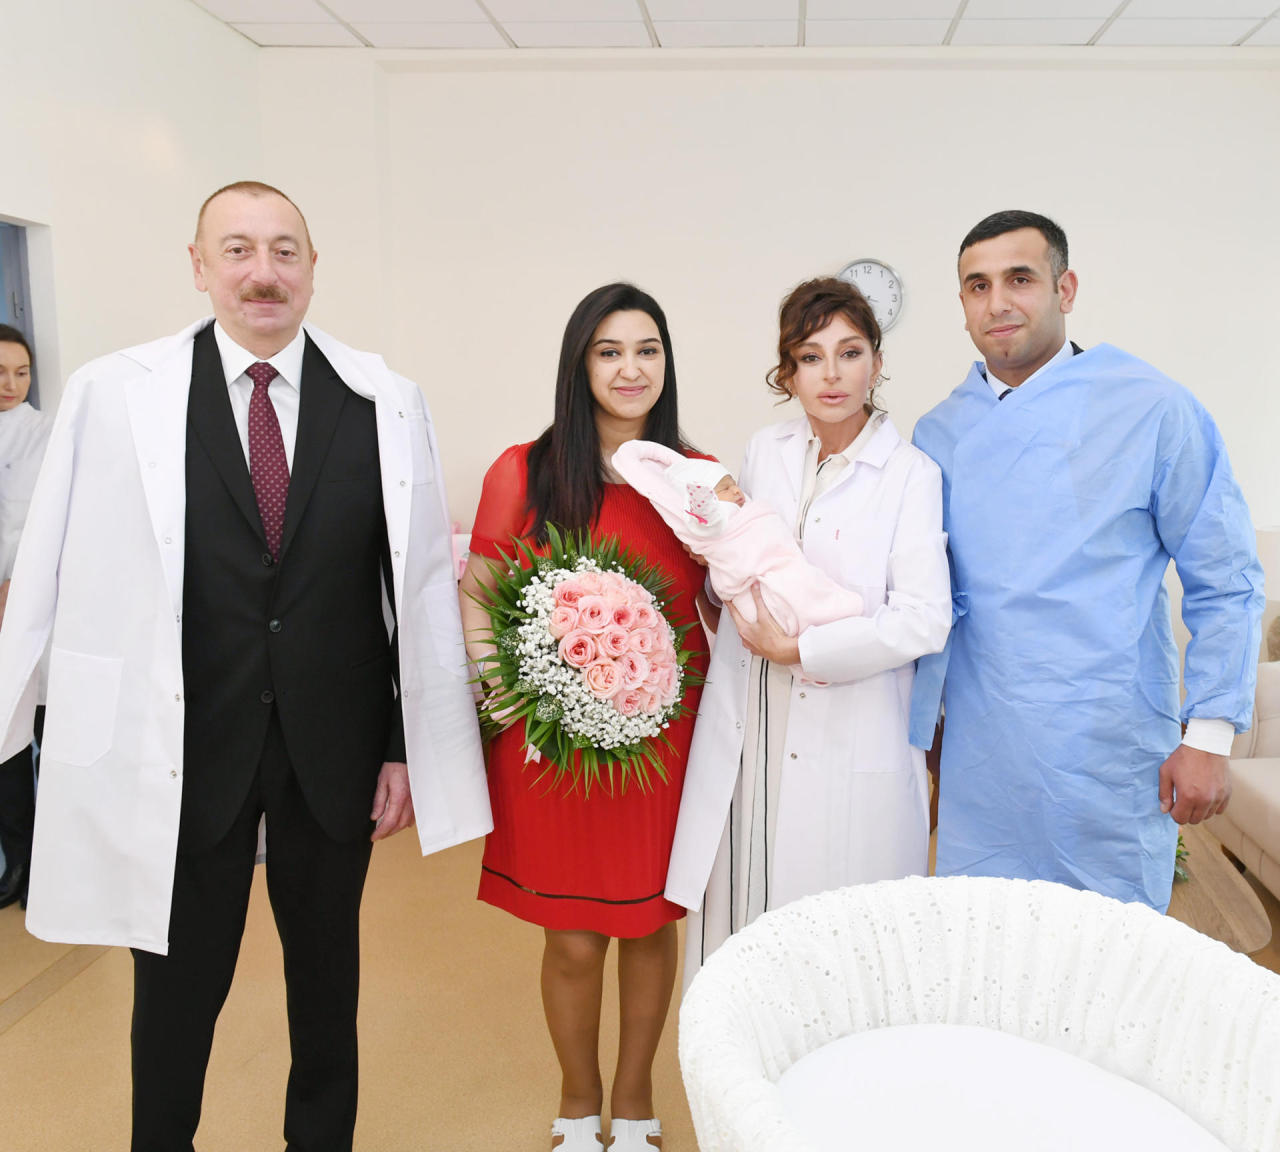 President, First Lady meet parents of Azerbaijan’s 10 millionth citizen [UPDATE]